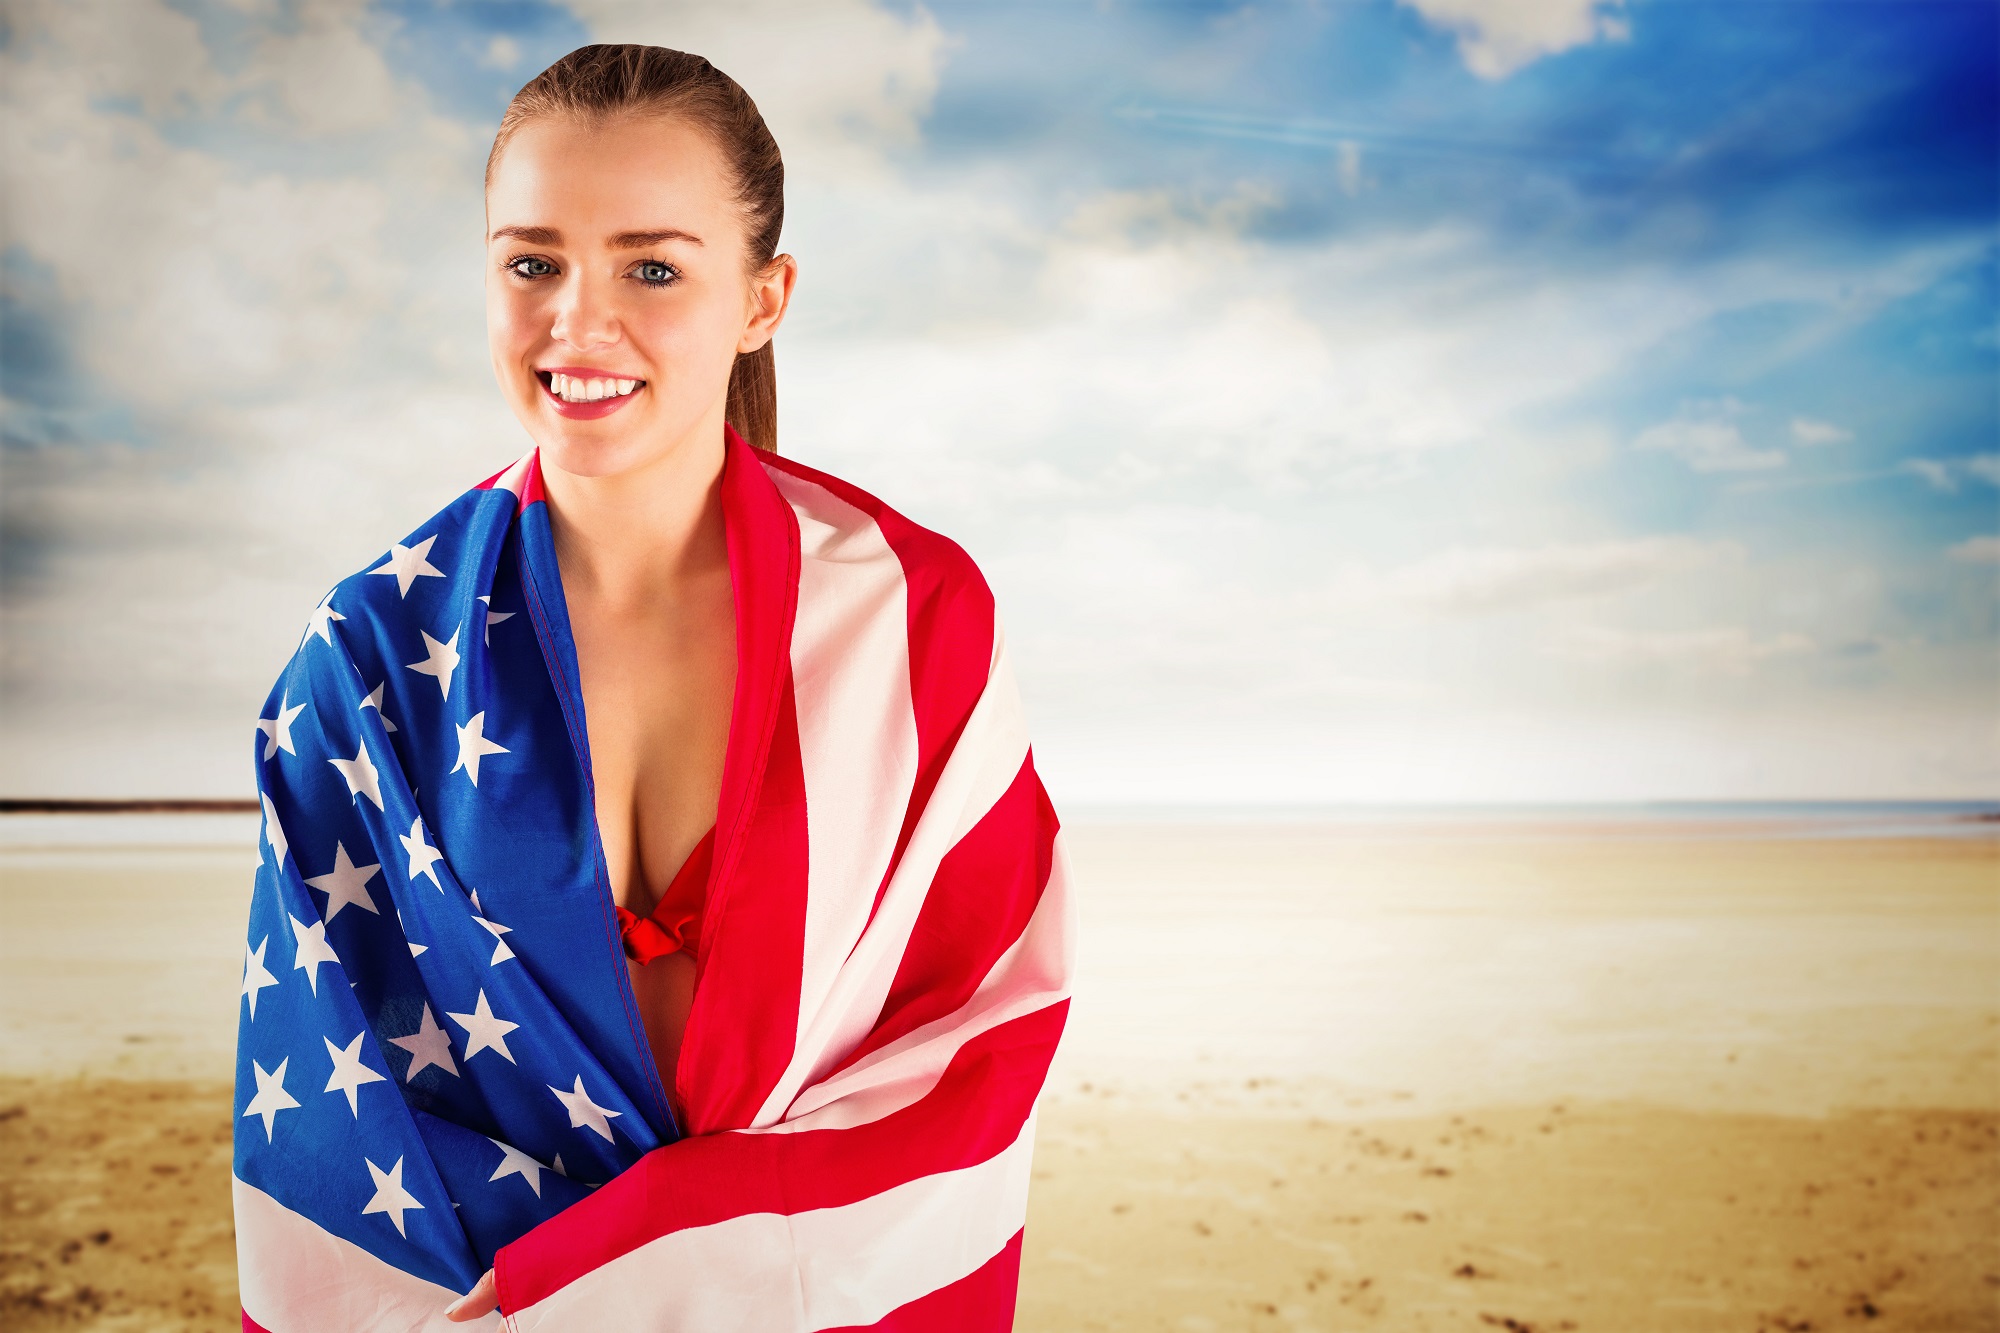 American flag bikini 6 Shutterstock wavebreakmedia